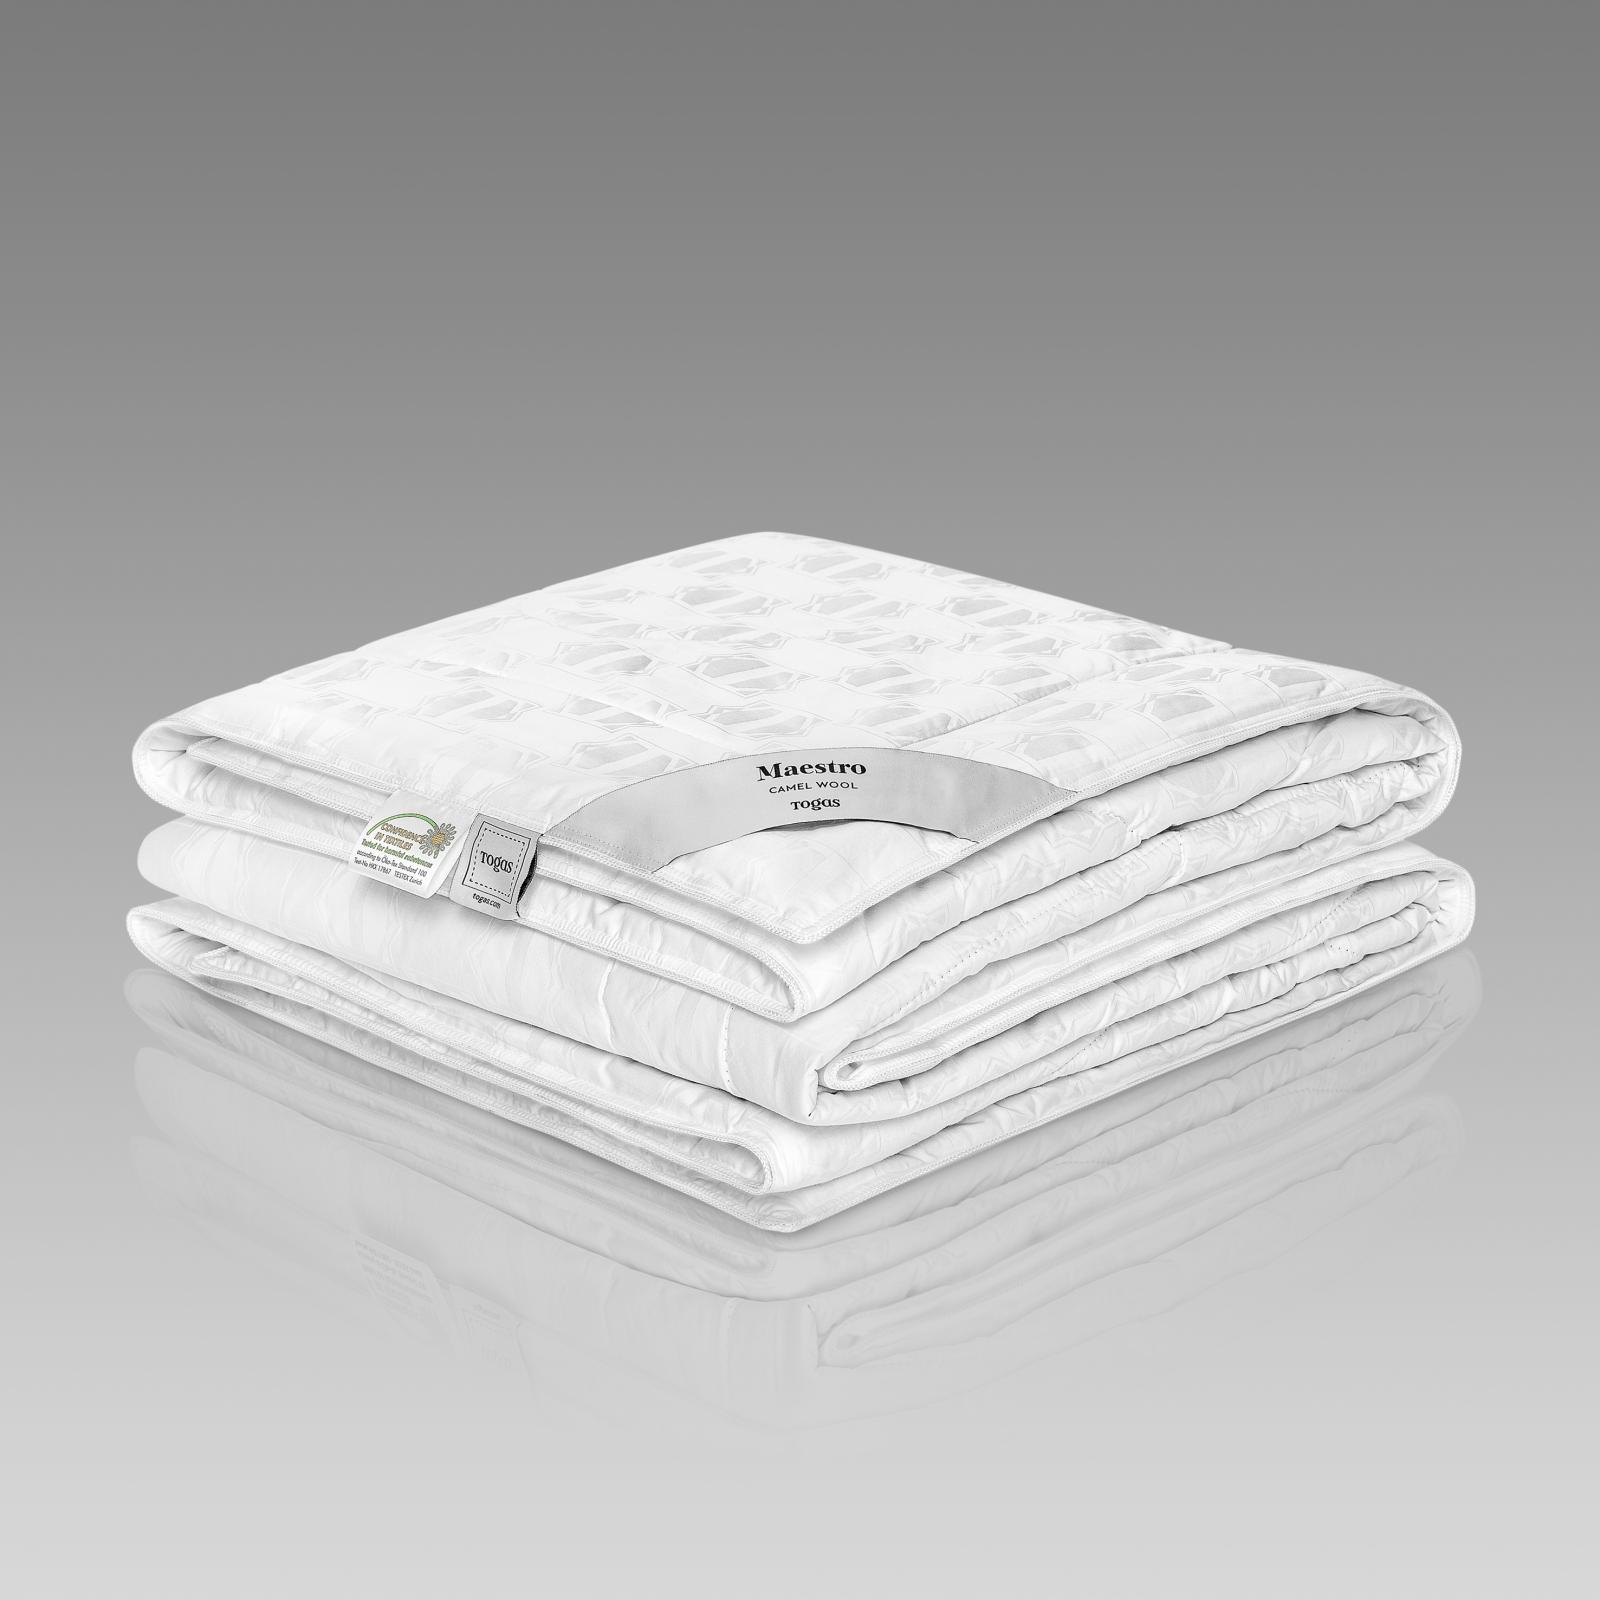 Одеяло Togas Маэстро белое 200х210 см (20.04.17.0089) одеяло 200х210 togas нобилис